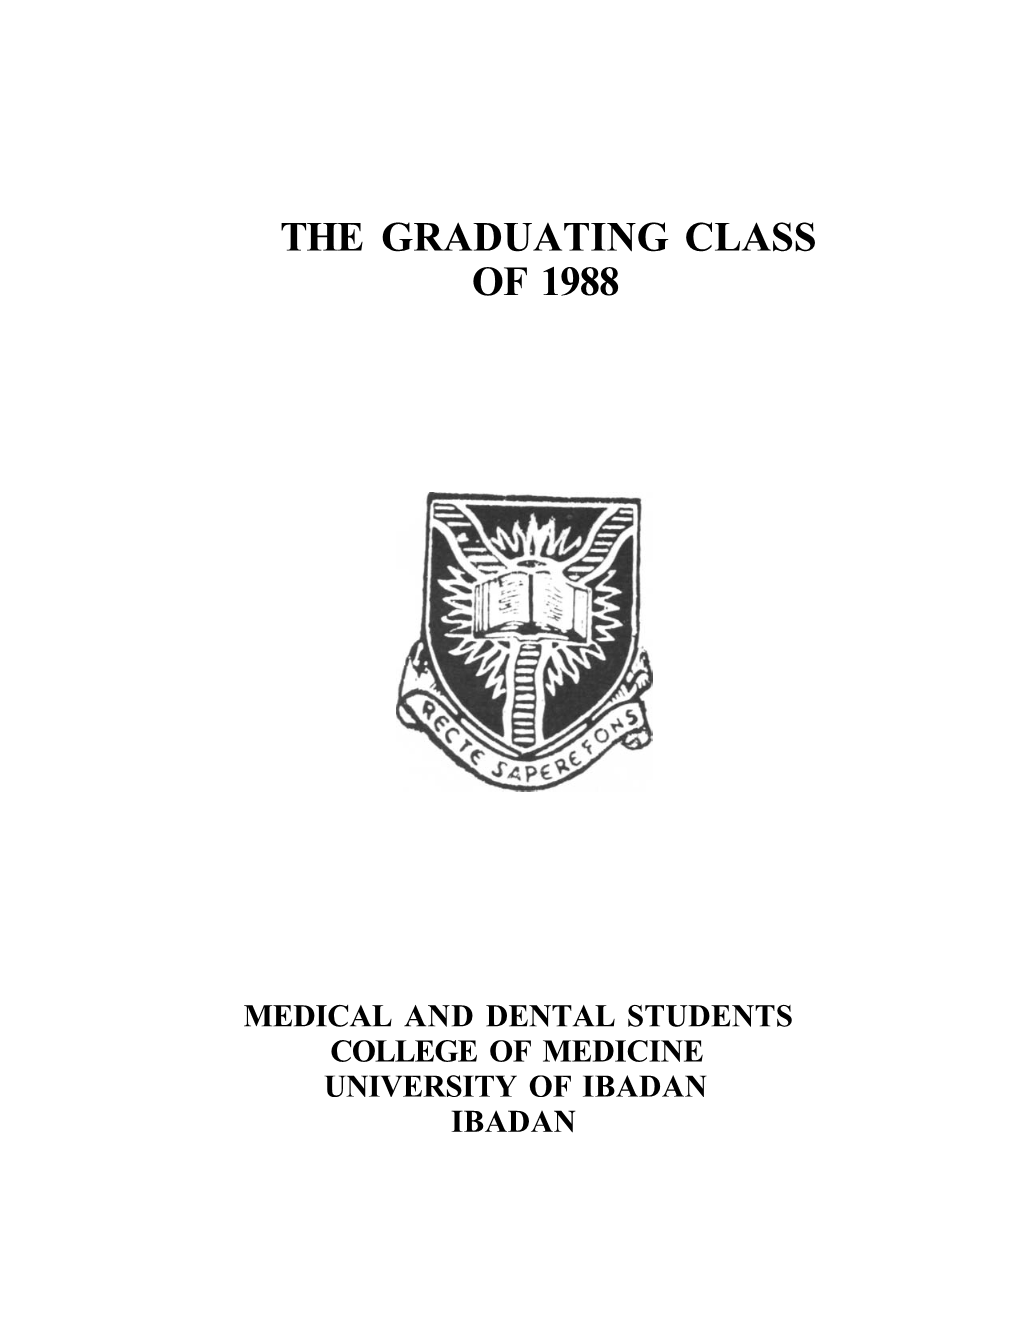 The Graduating Class of 1988